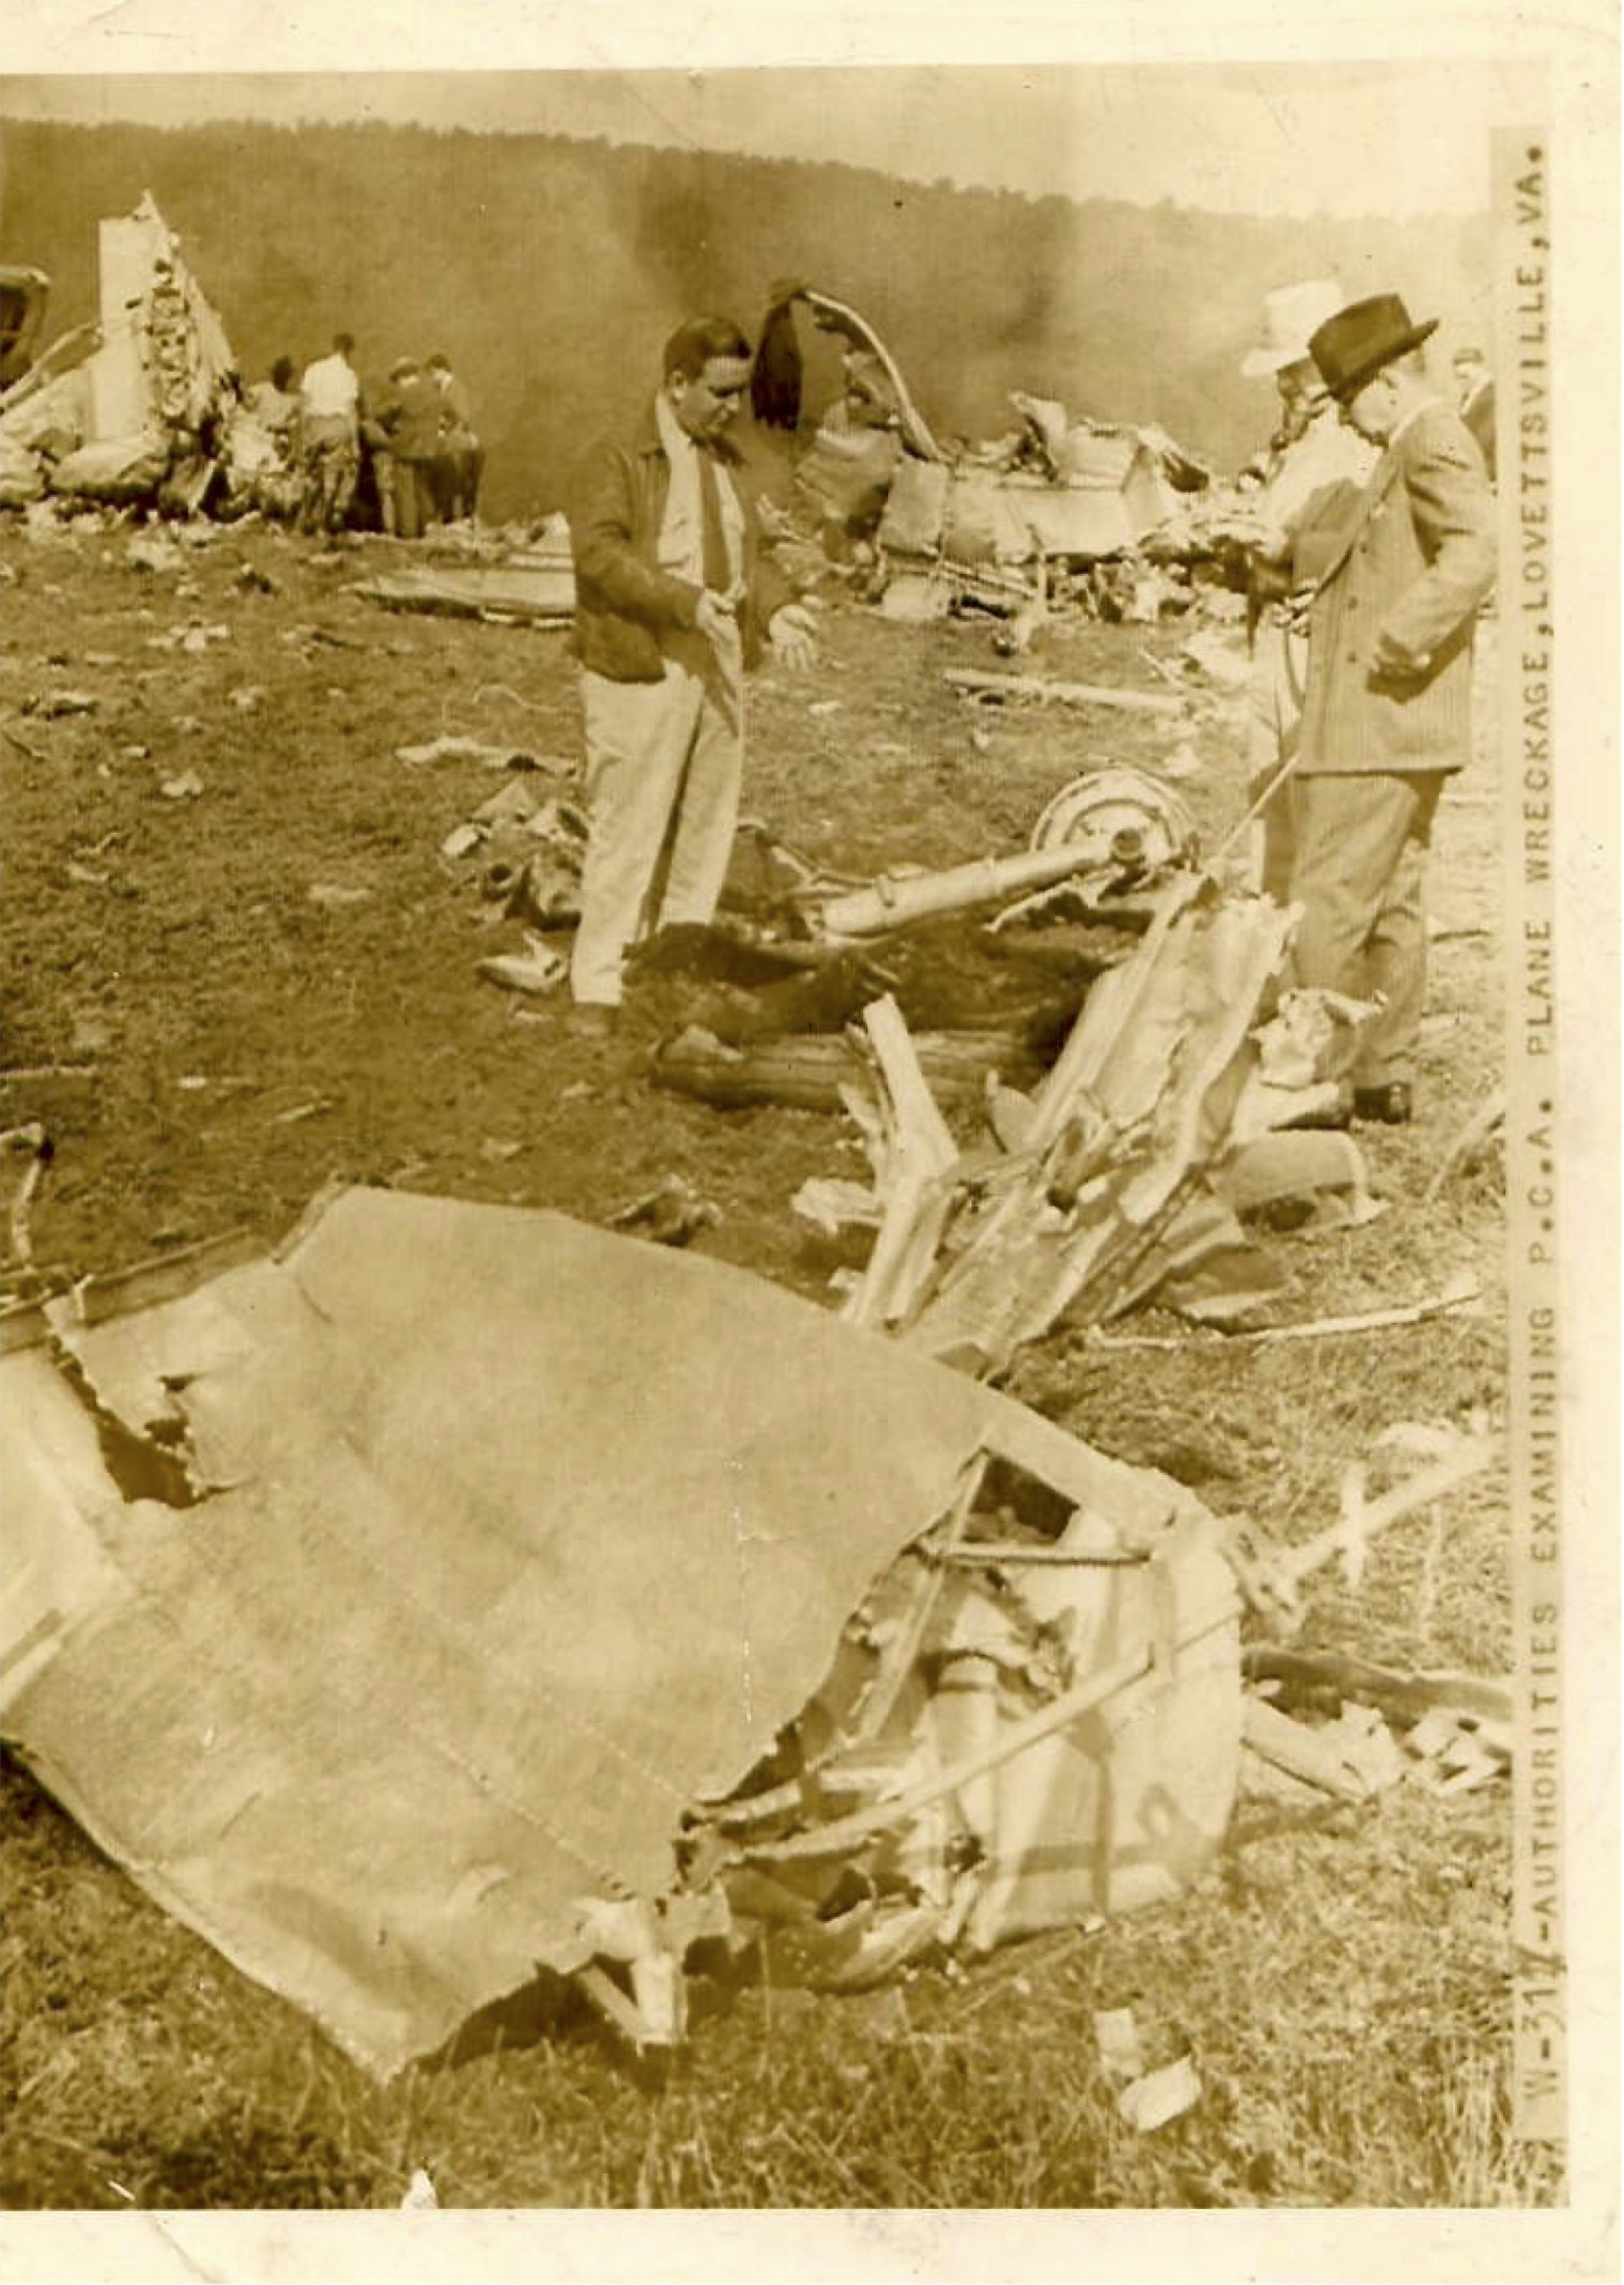 1940-lovettsville-air-disaster-newspicture-jpeg-from-ebay_enhanced